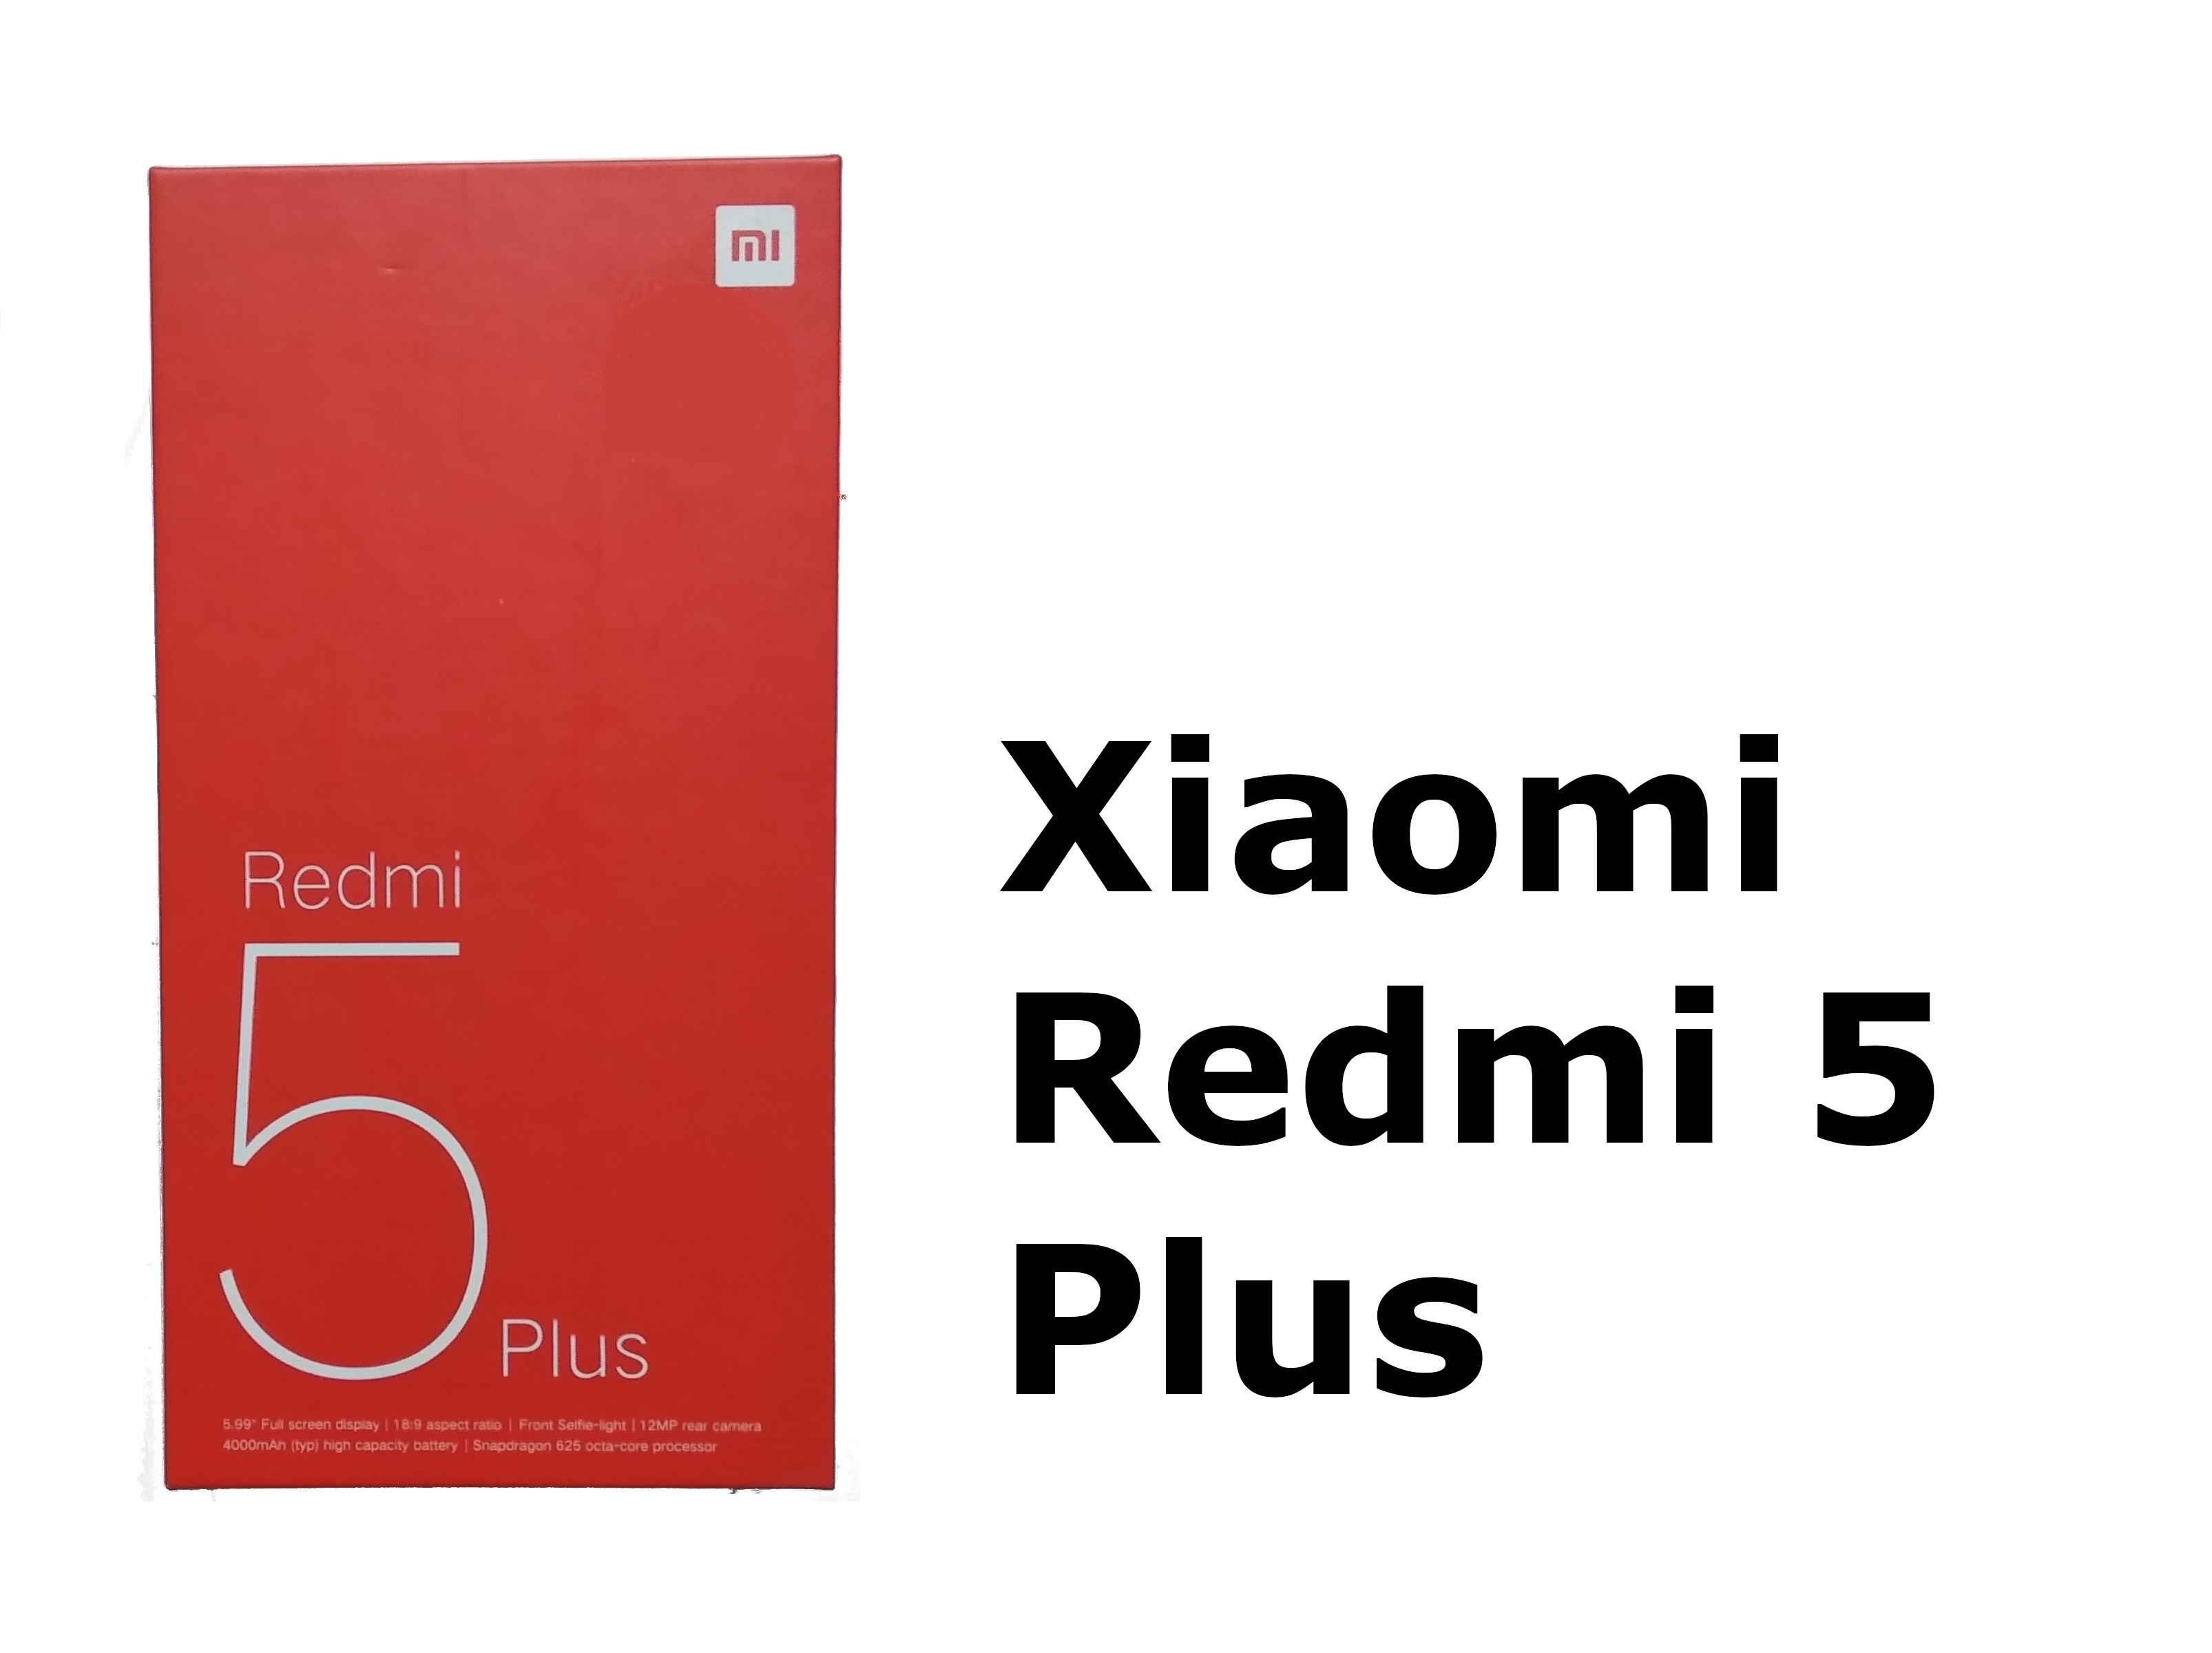 Xiaomi(シャオミ)のスマホ「Redmi 5 Plus」の使用レビュー1【動作スピード・耐久性の評価】